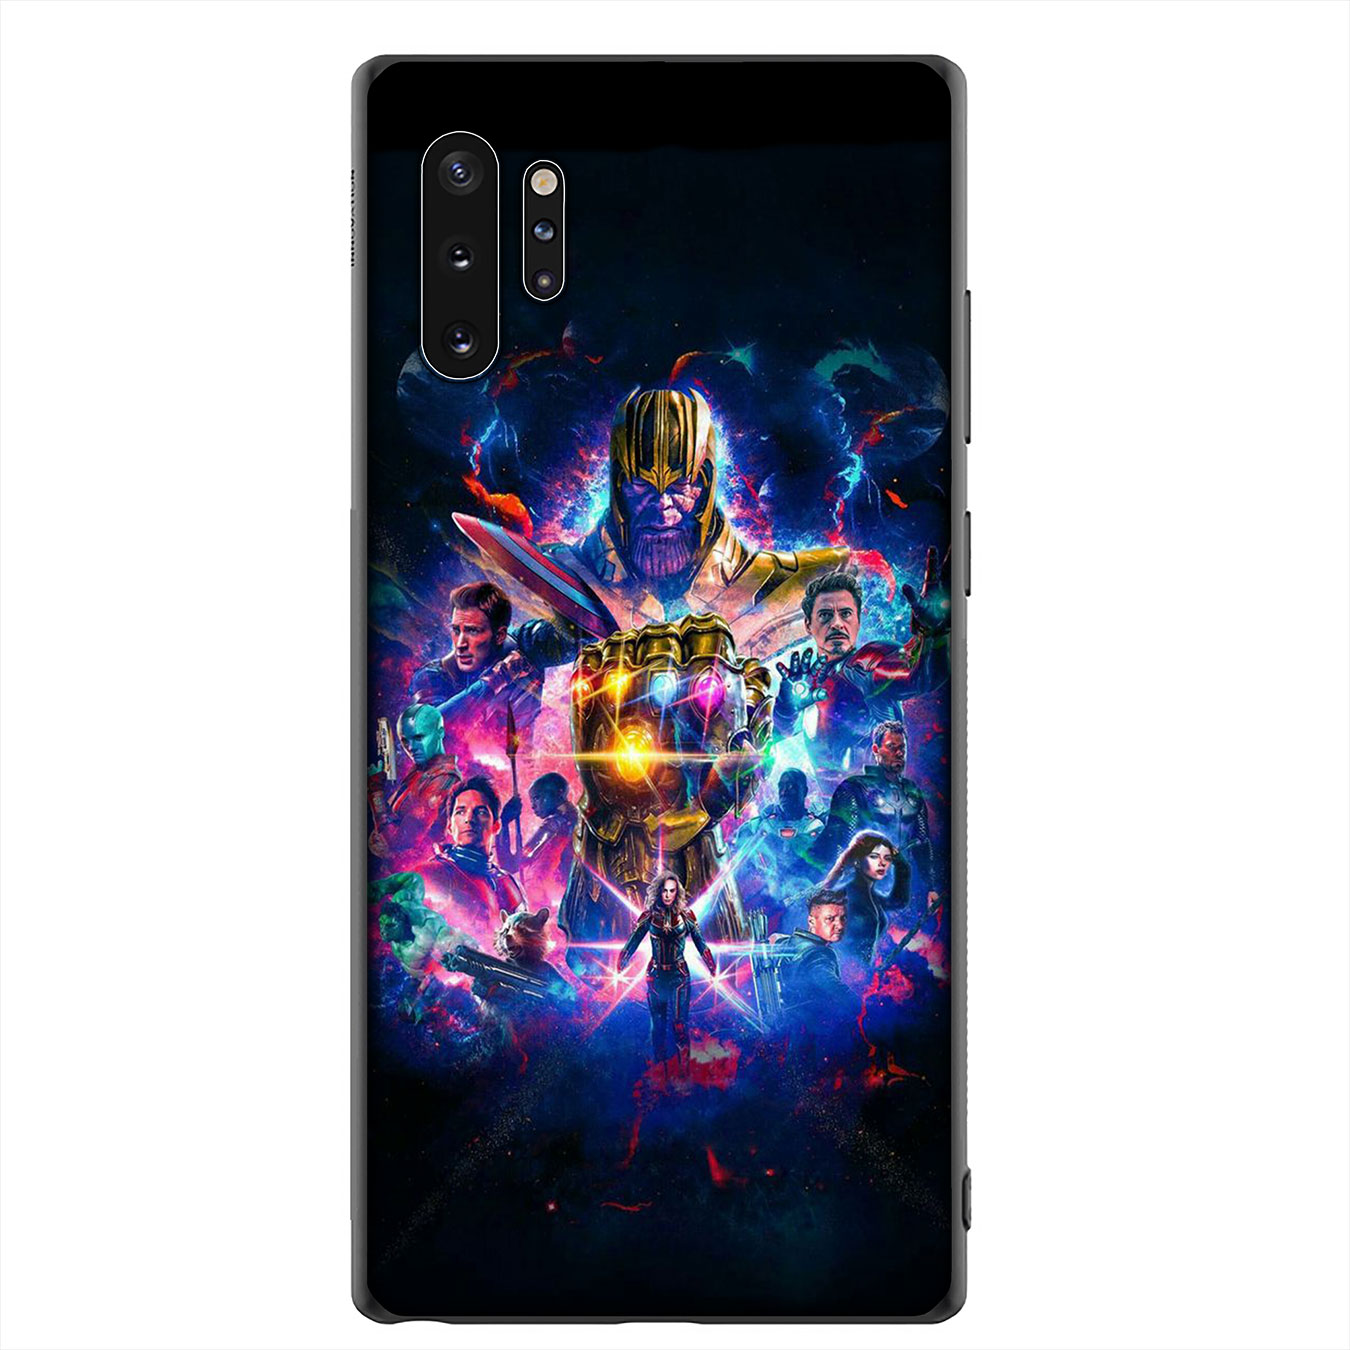 Samsung Galaxy A02S J2 J4 Core J5 J6 Plus J7 Prime j6+ A42 + Phone Case Soft Silicone Casing Avengers Endgame Marvel Thanos